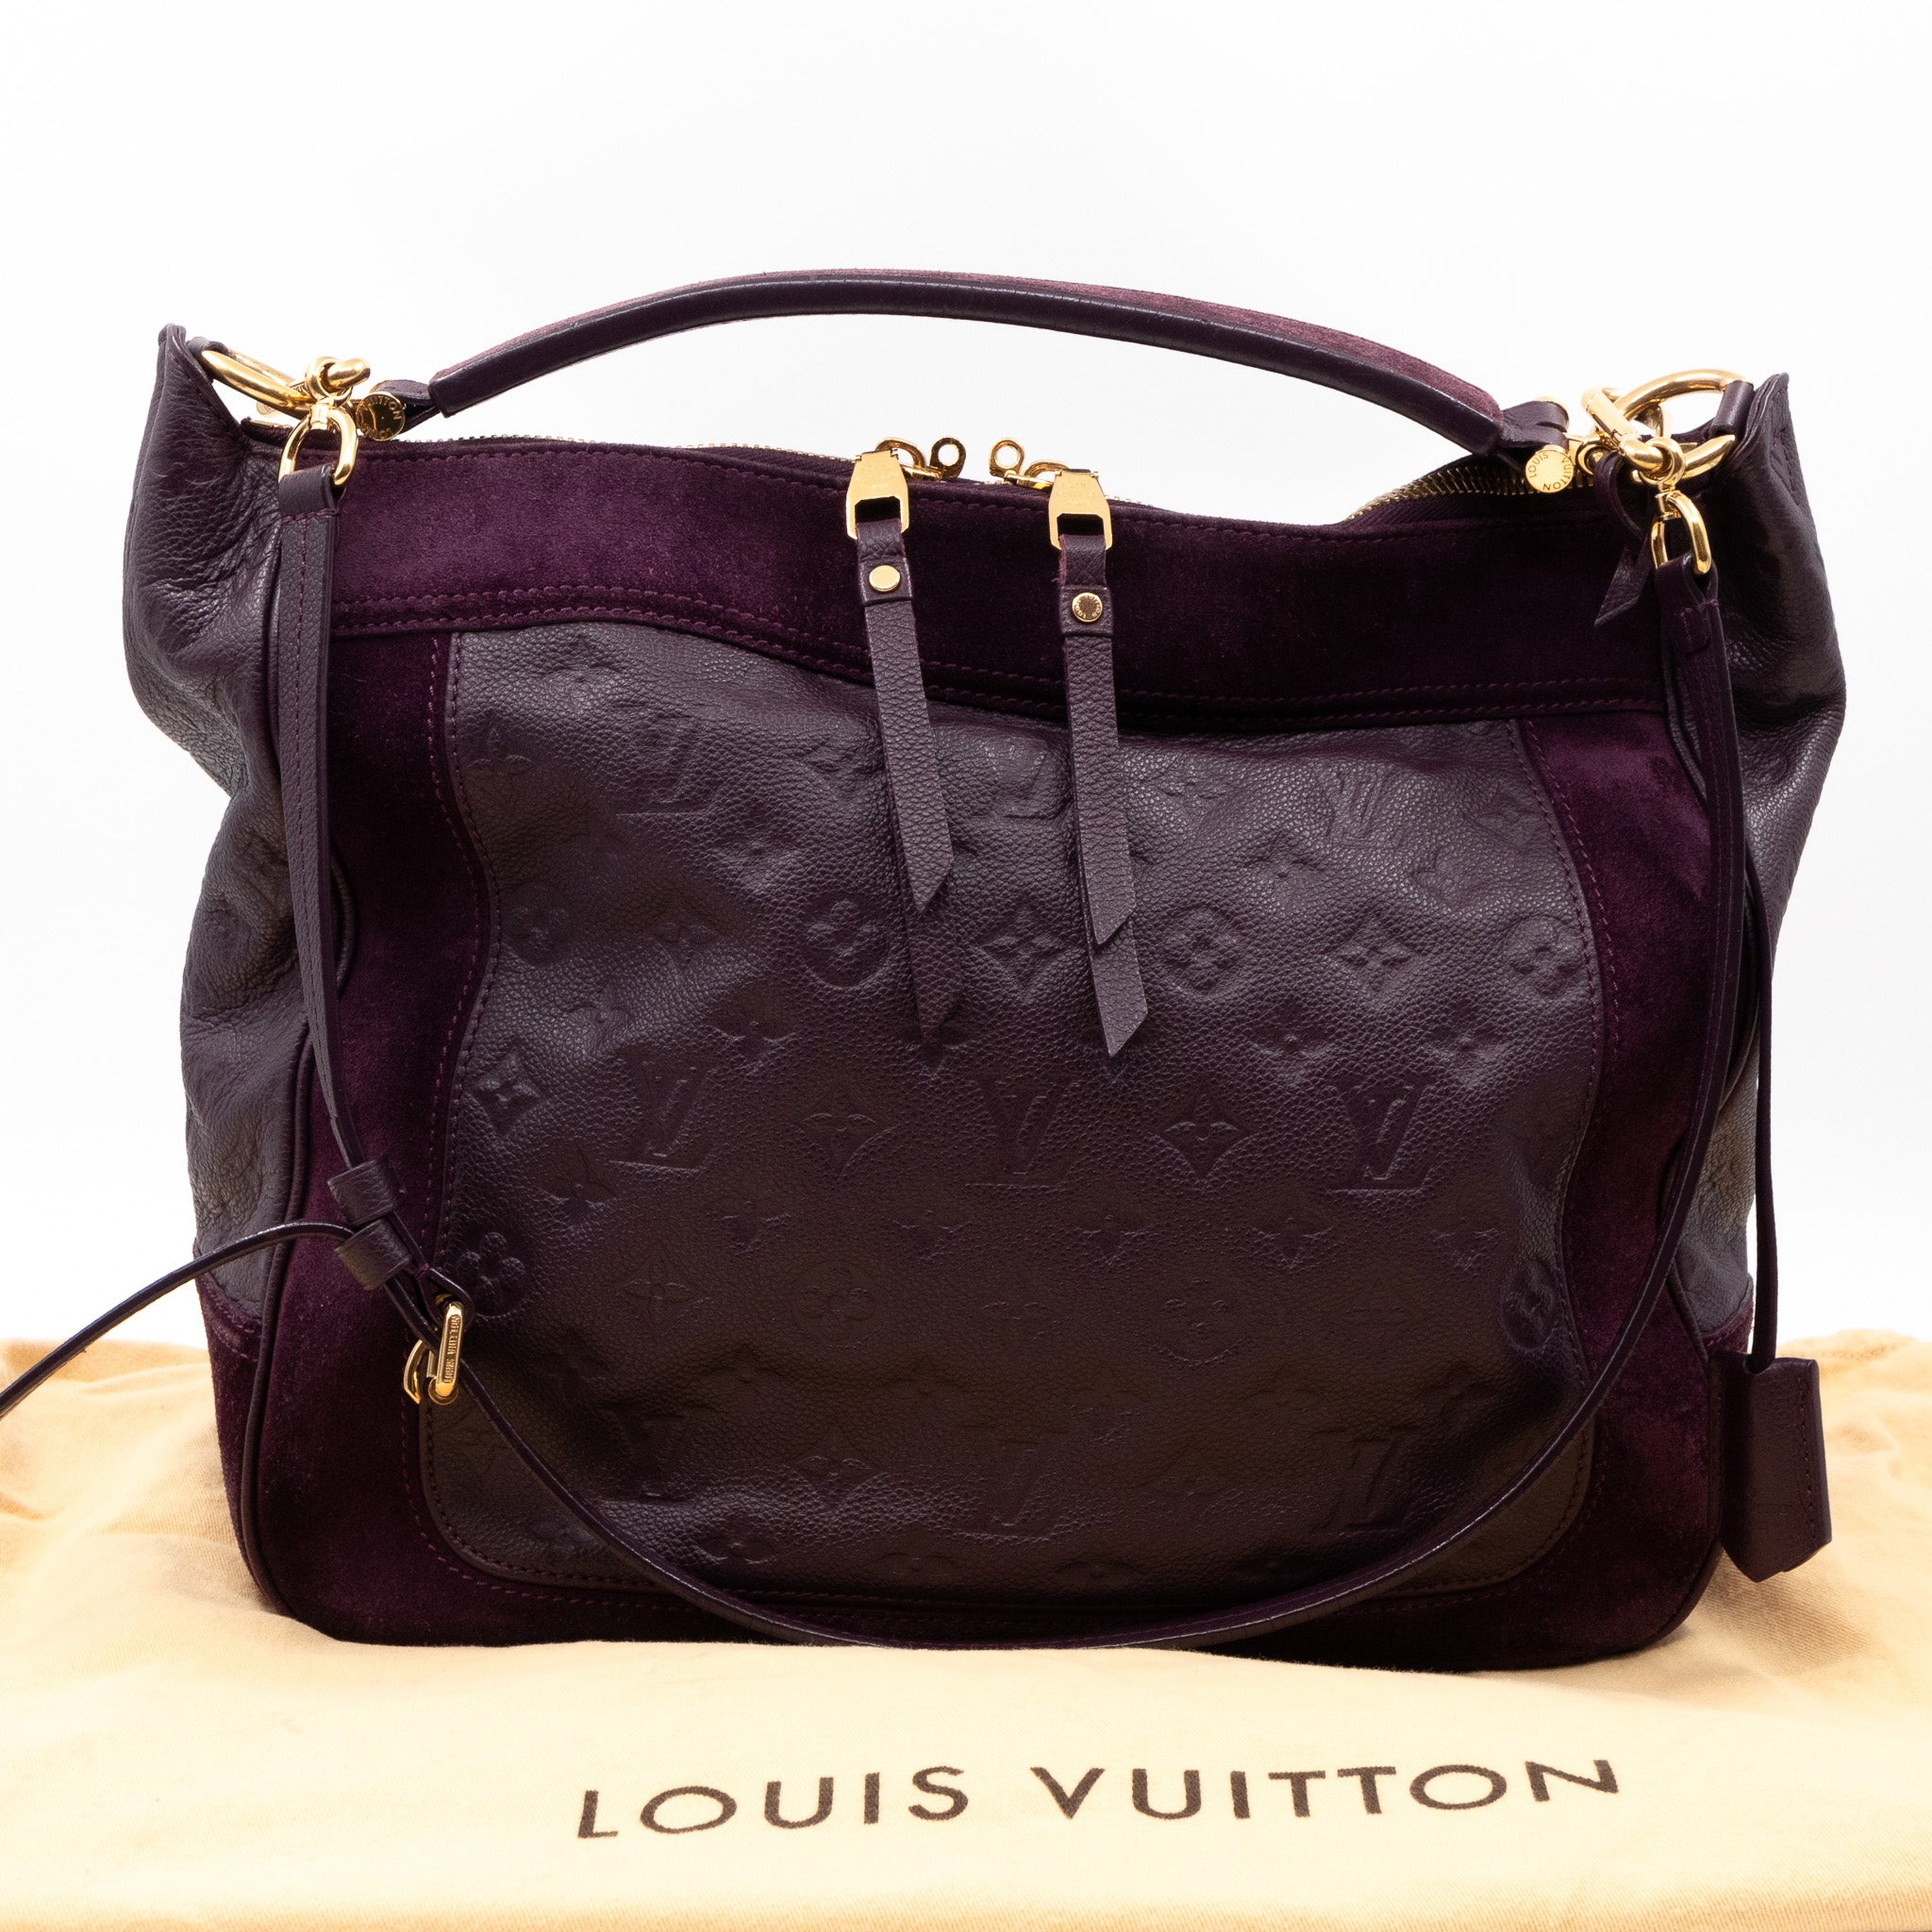 Review Audacieuse PM (discontinued) Vuitton bag ASMR video 